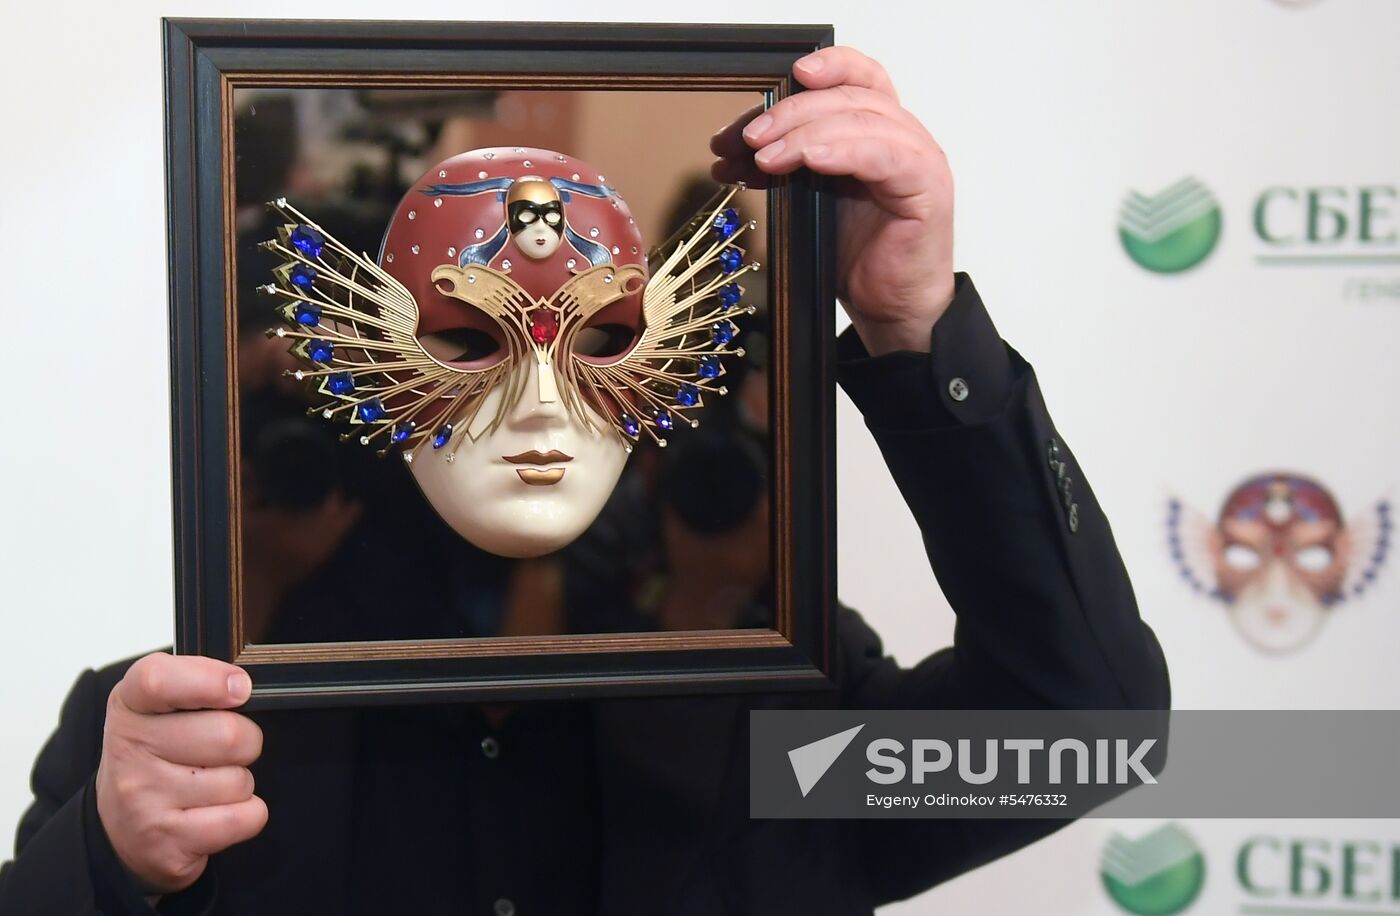 Golden Mask awards ceremony